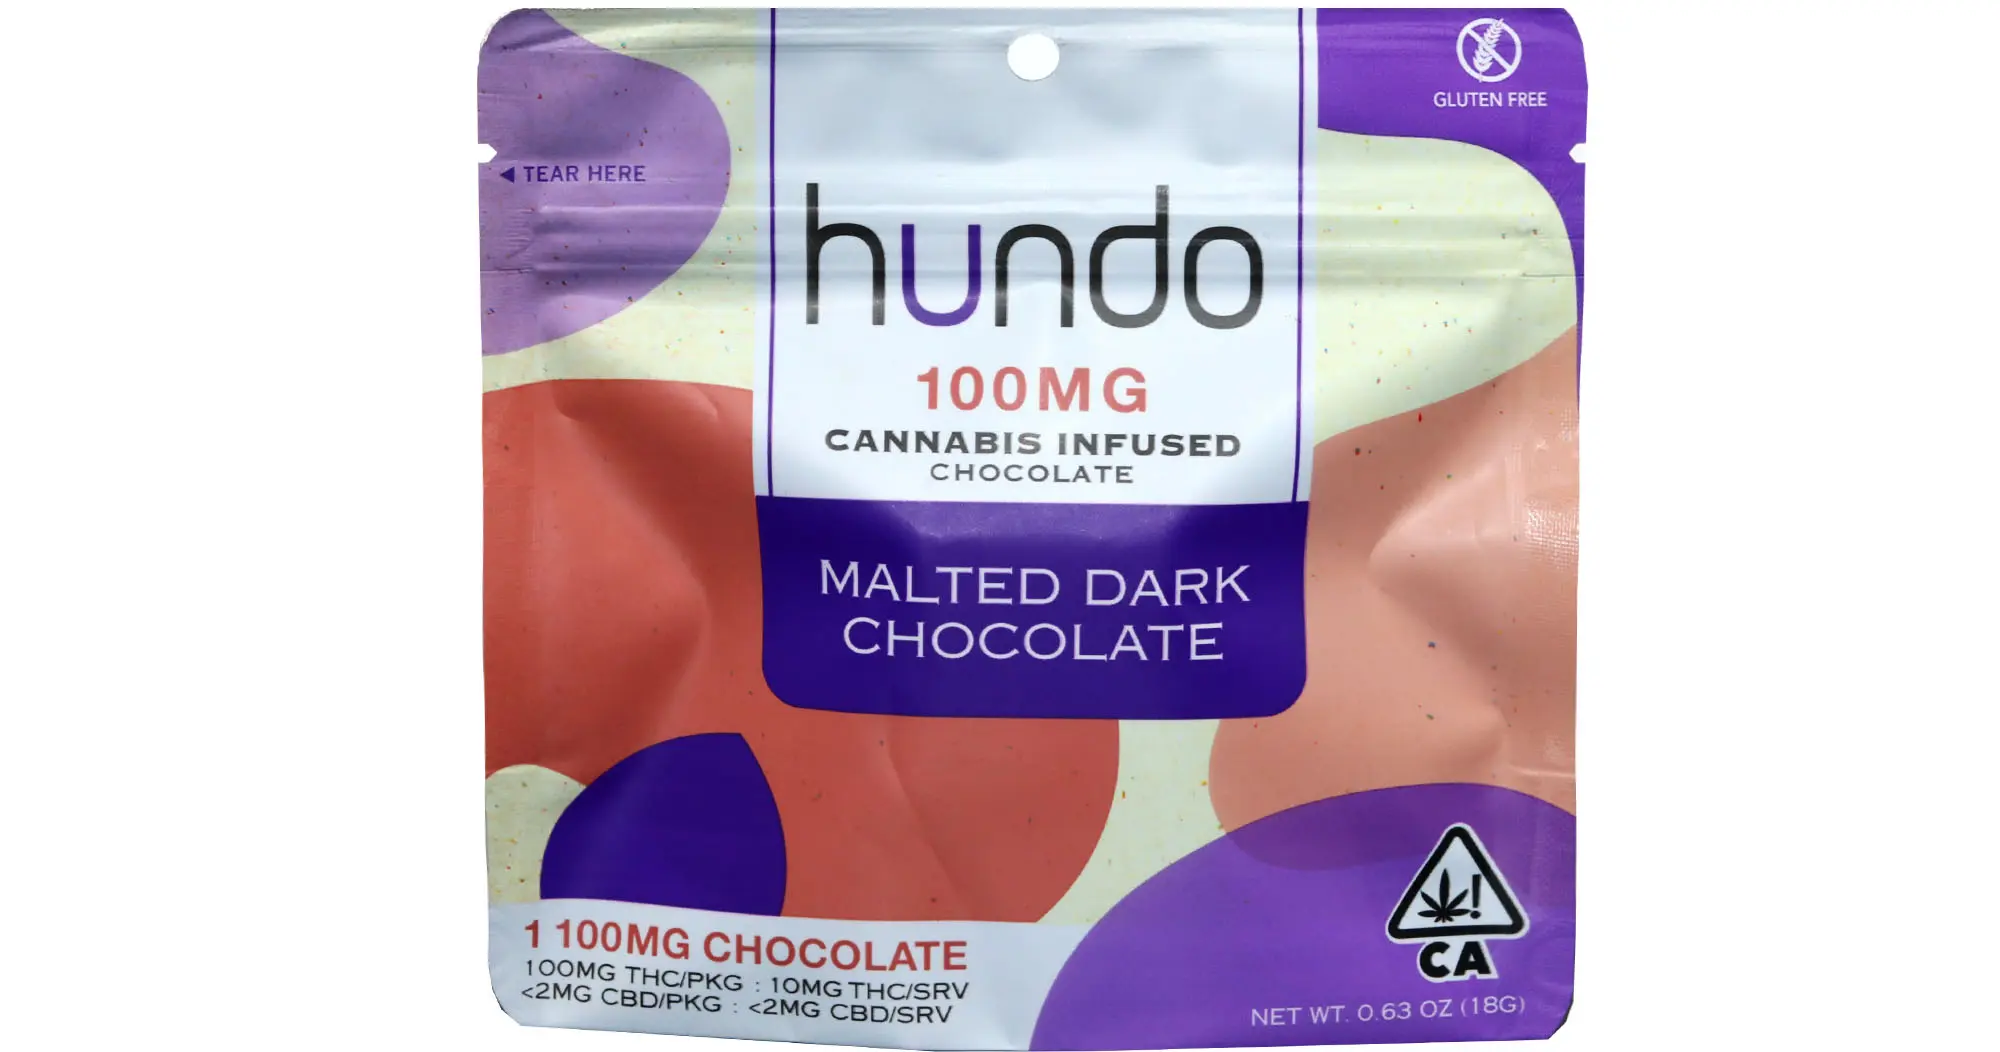 Malt Dark Chocolate